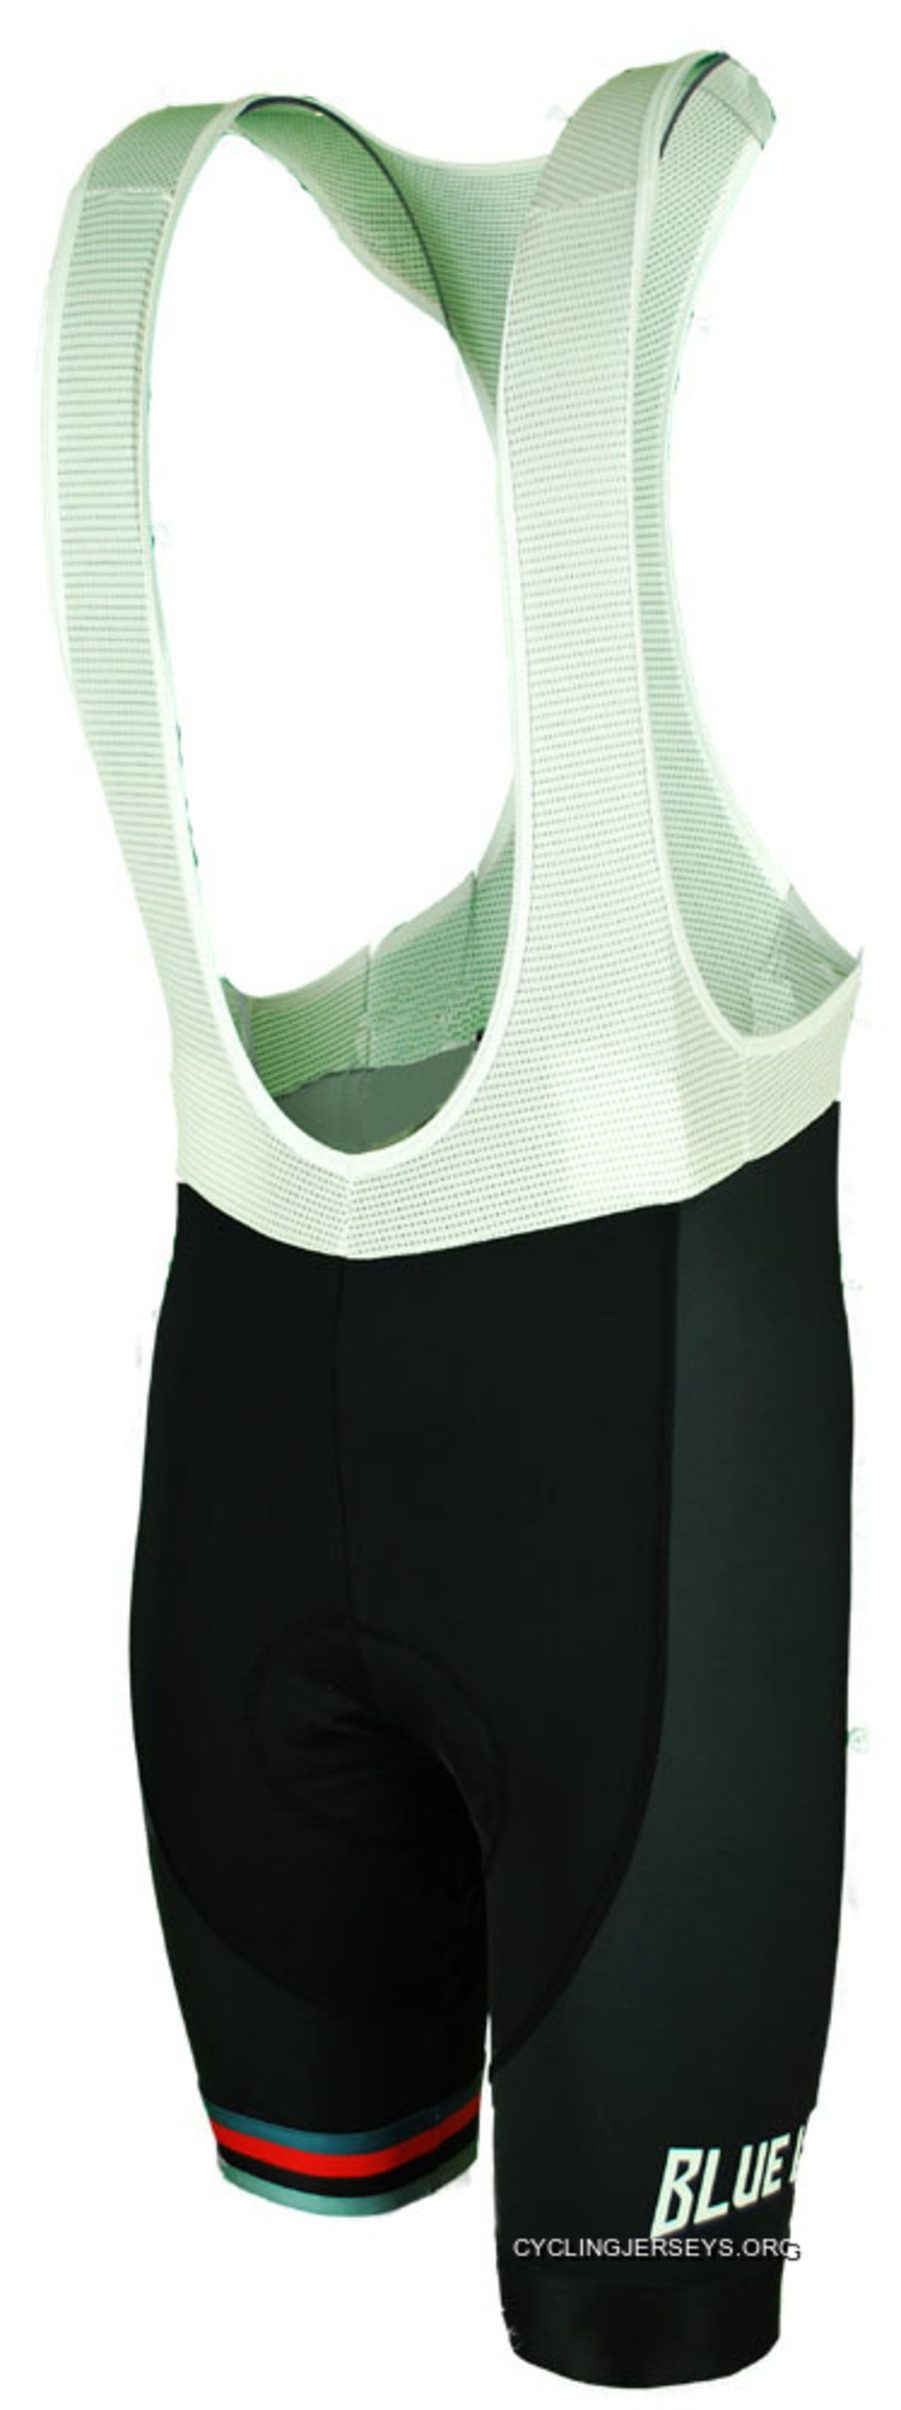 BlueLine Staynor Black Three Stripe Classic Bib Shorts Closeout Super Deals